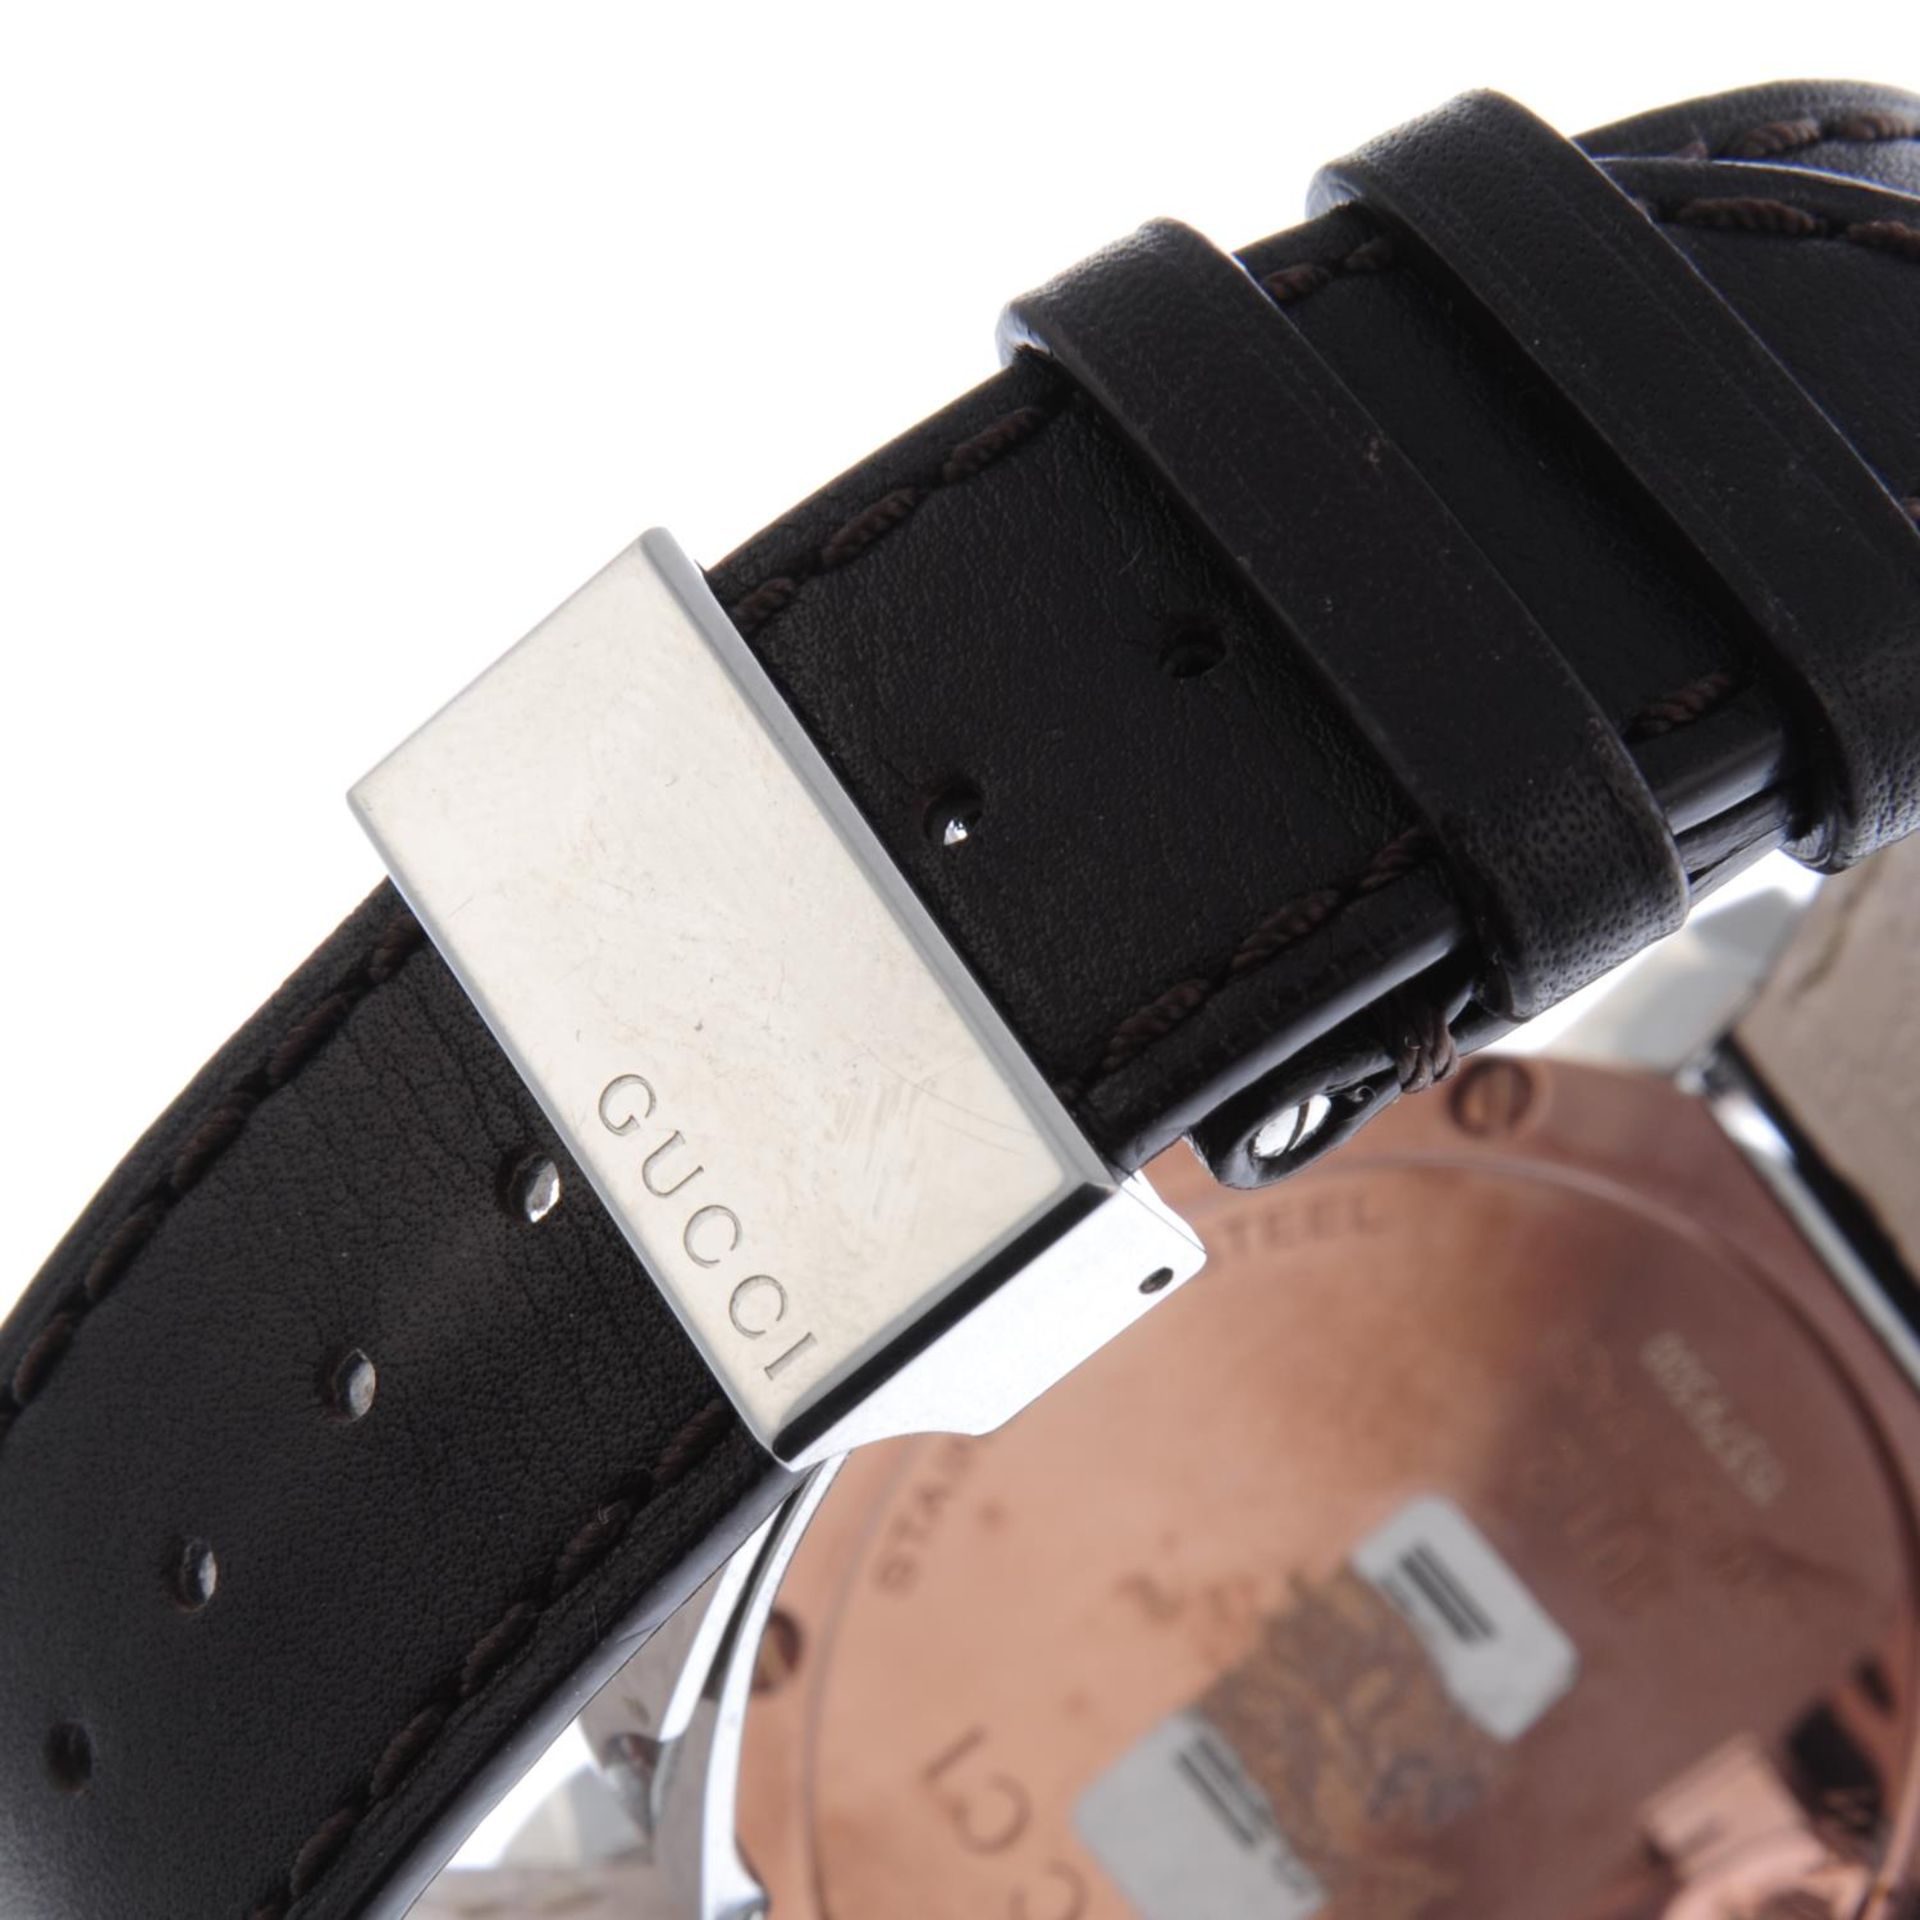 GUCCI - a gentleman's G-Chrono chronograph wrist watch. - Bild 2 aus 4